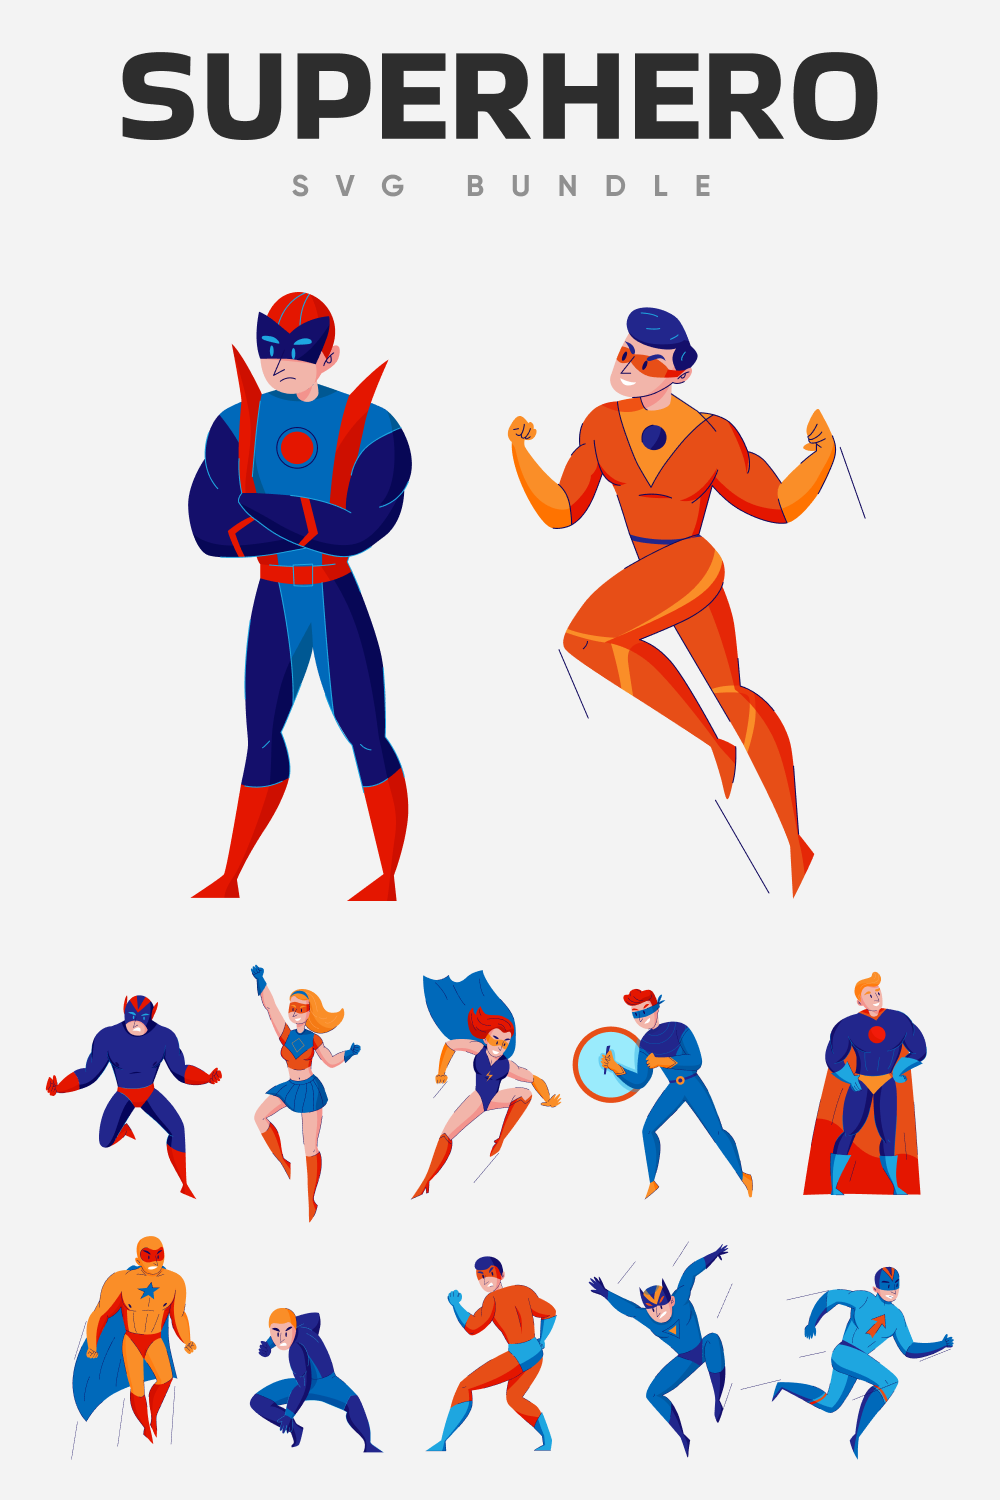 Strong superhero SVG bundle.